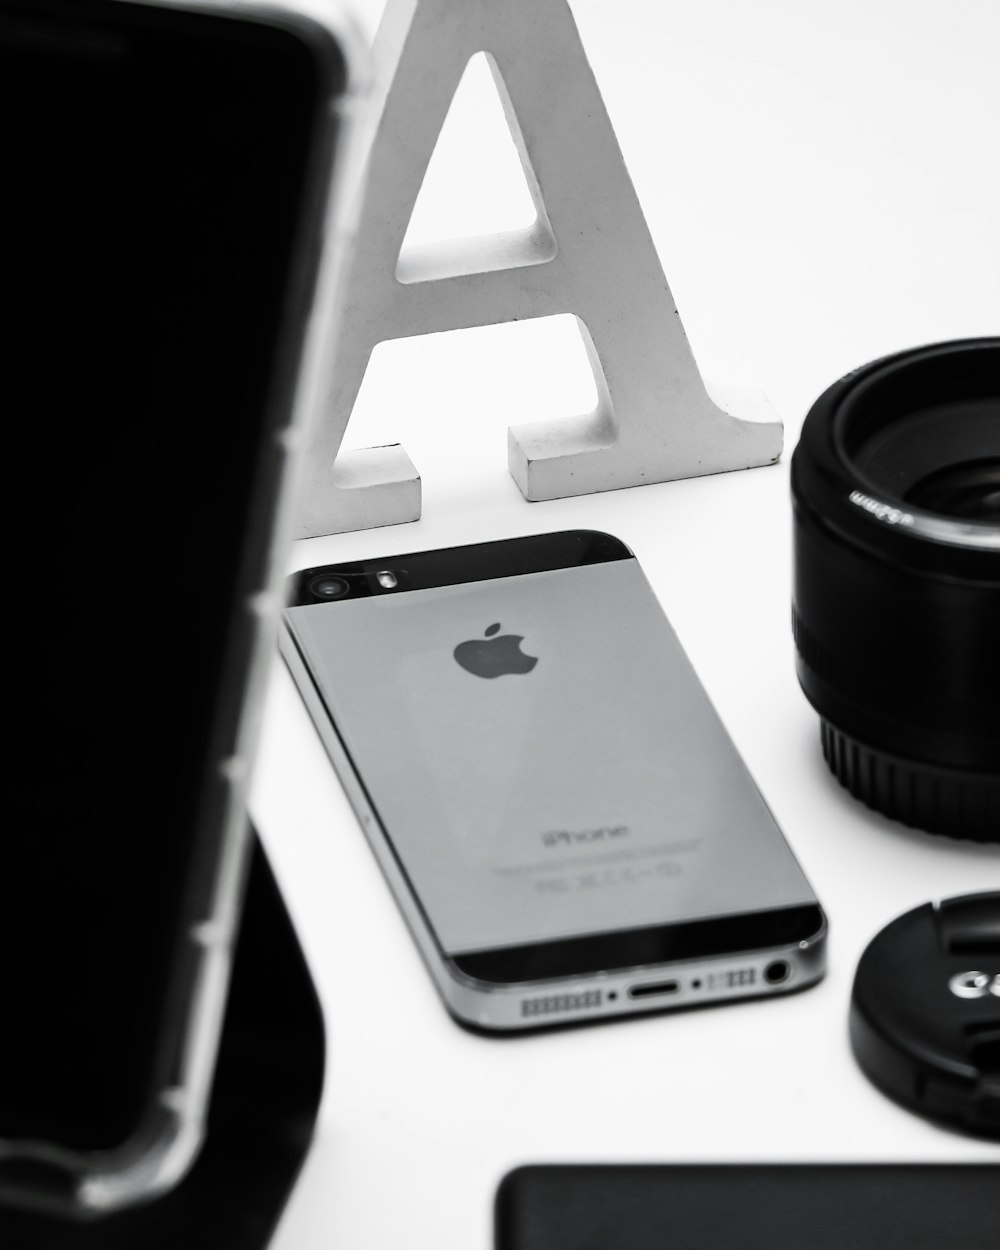 silver iphone 6 beside black camera lens